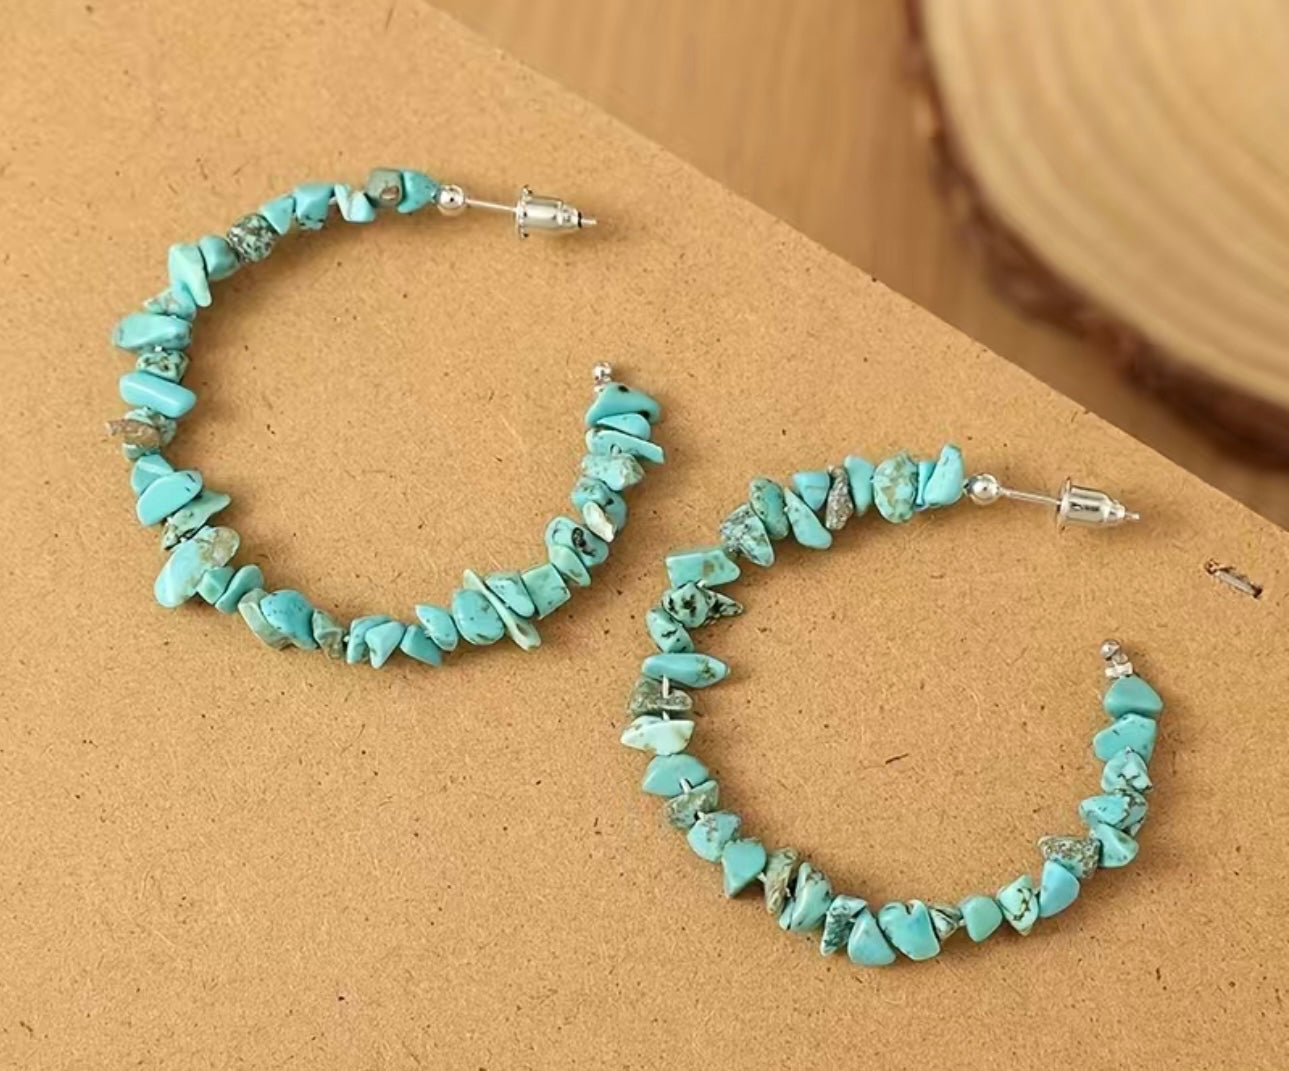 Turquoise stone earrings